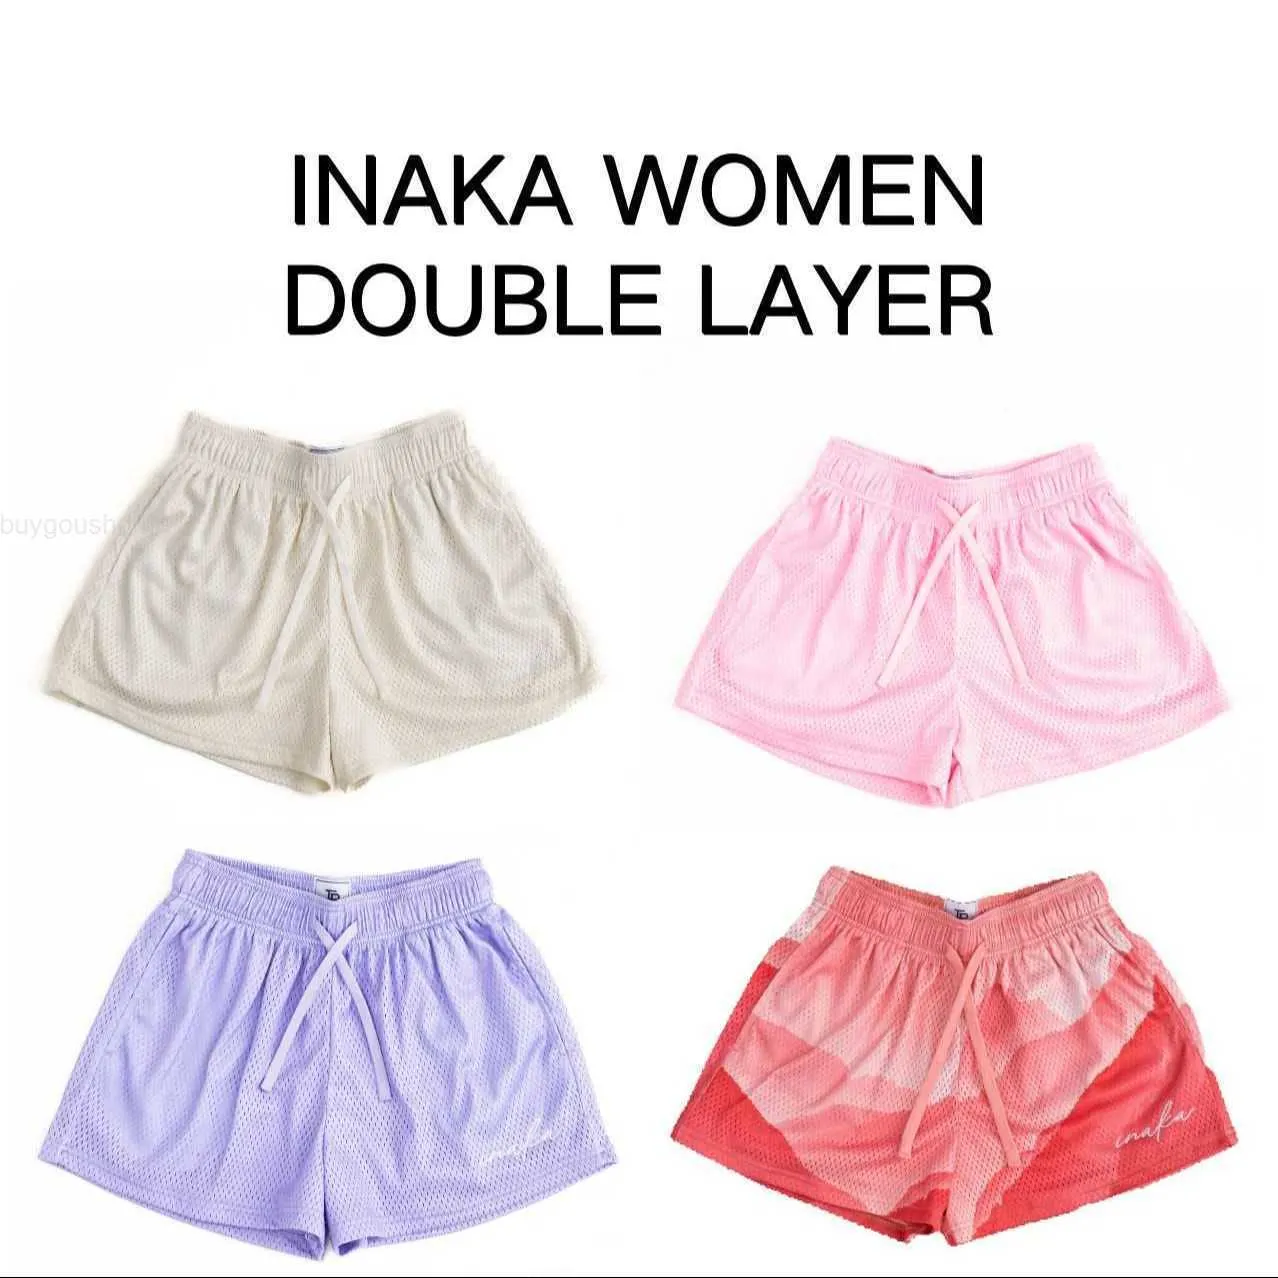 Women's Shorts Inaka Shorts Women Double Mesh Shorts Basic Colors GYM Graphic Inaka Power Shorts For Women